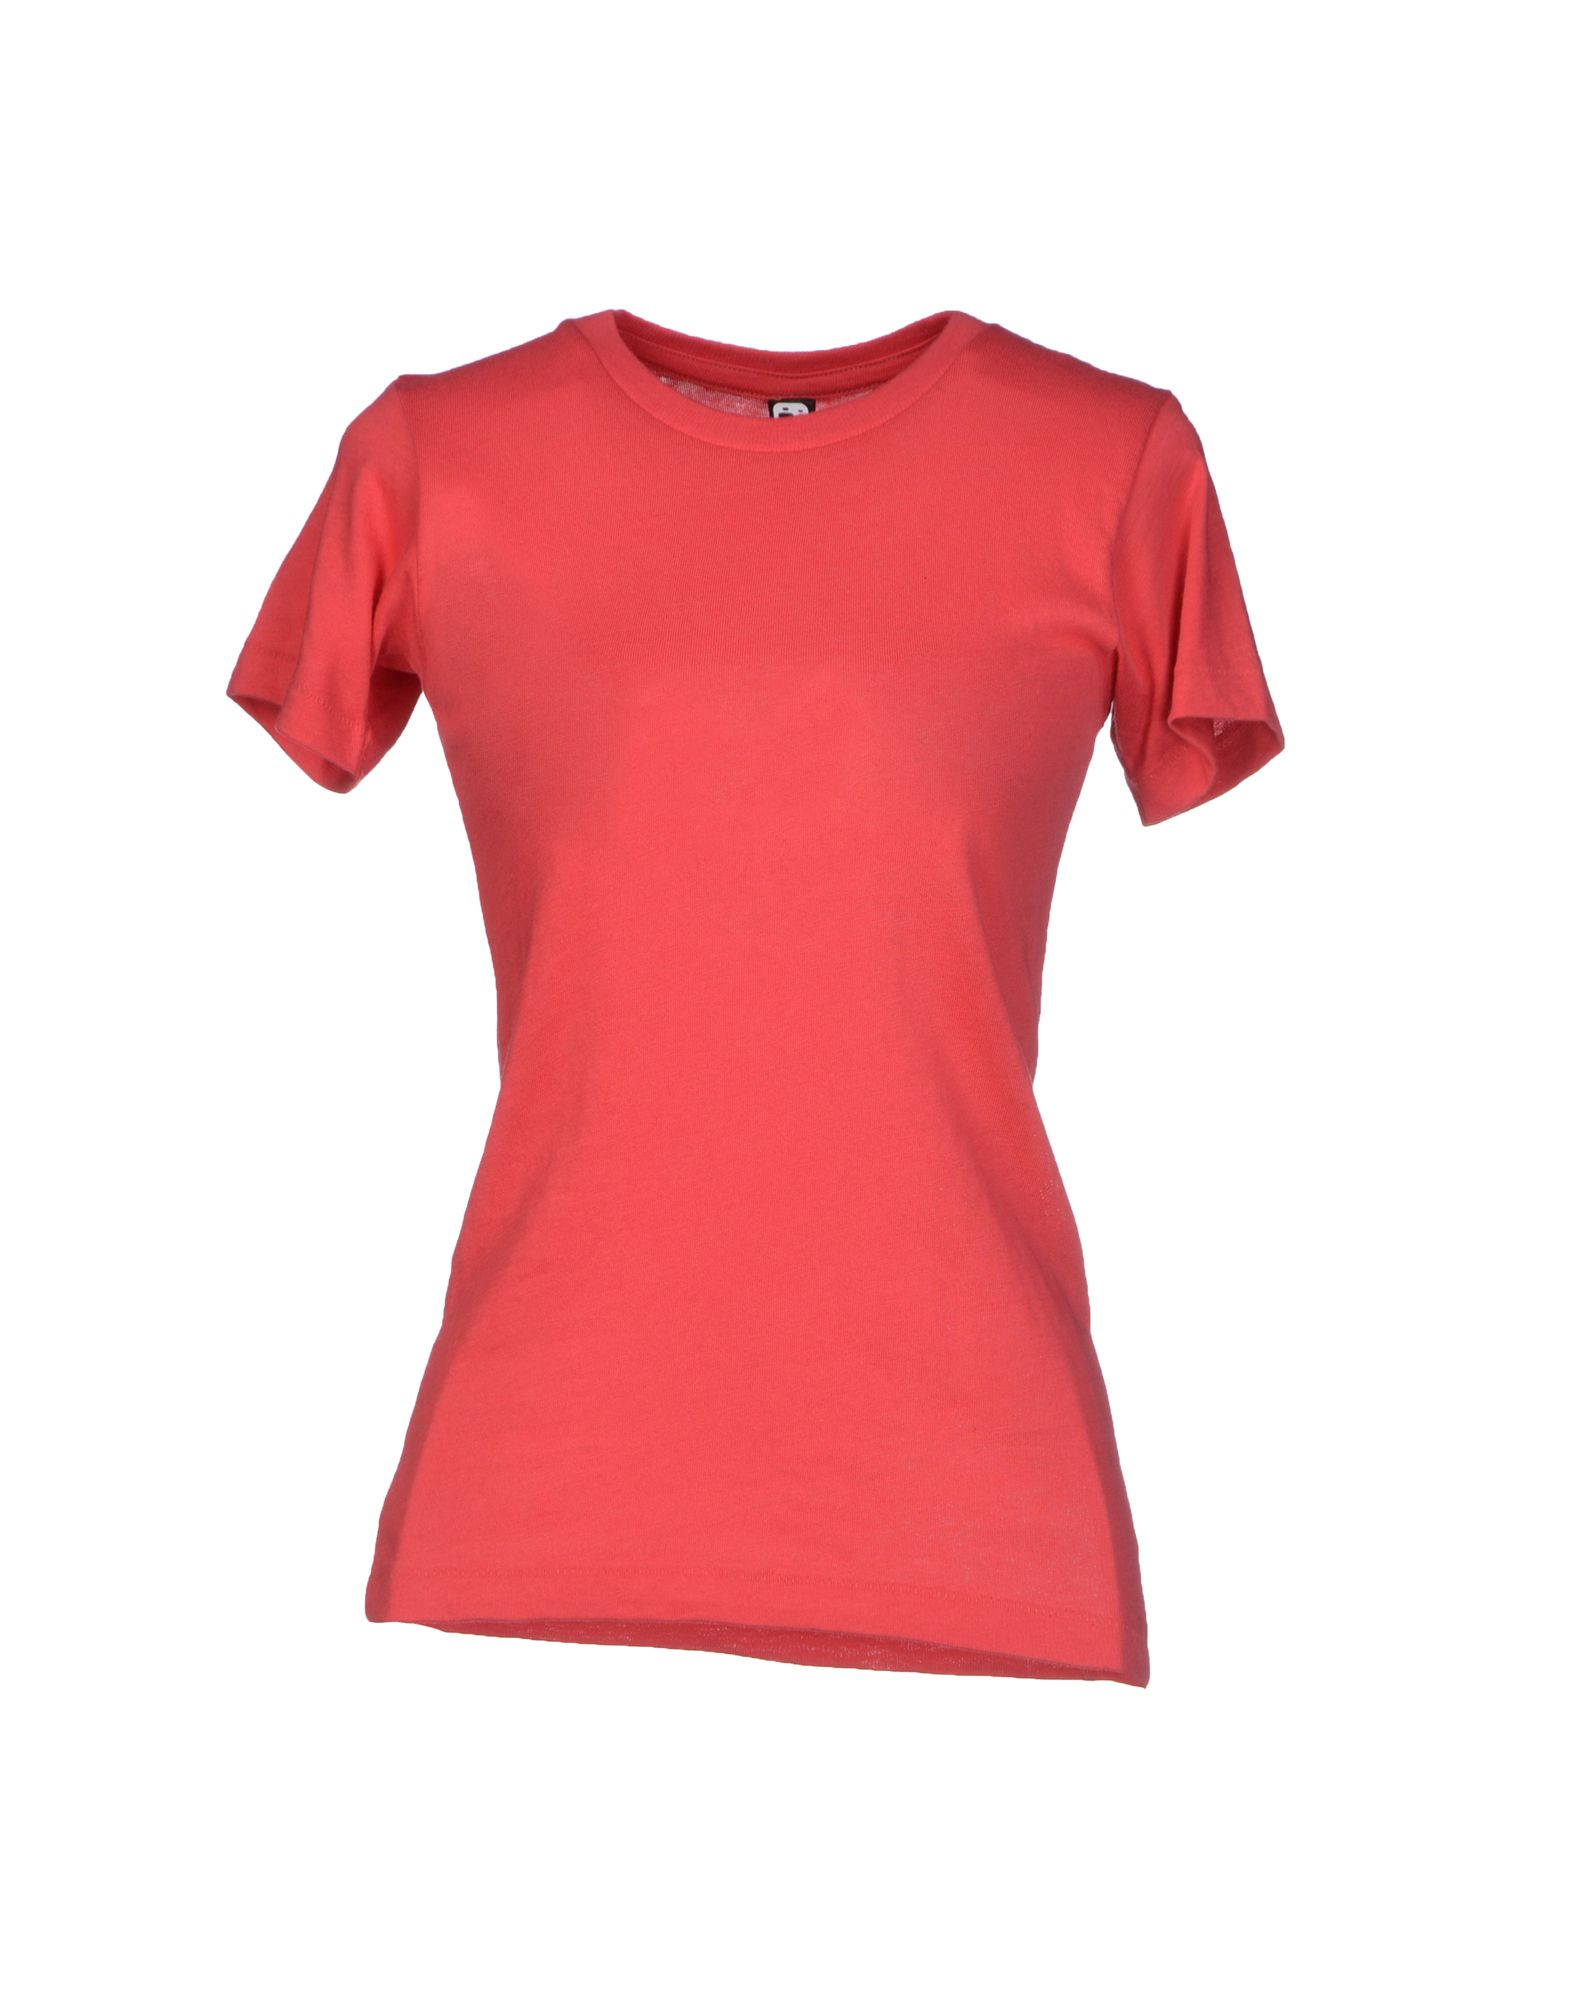 Lyst - Alternative Apparel T-shirt in Pink